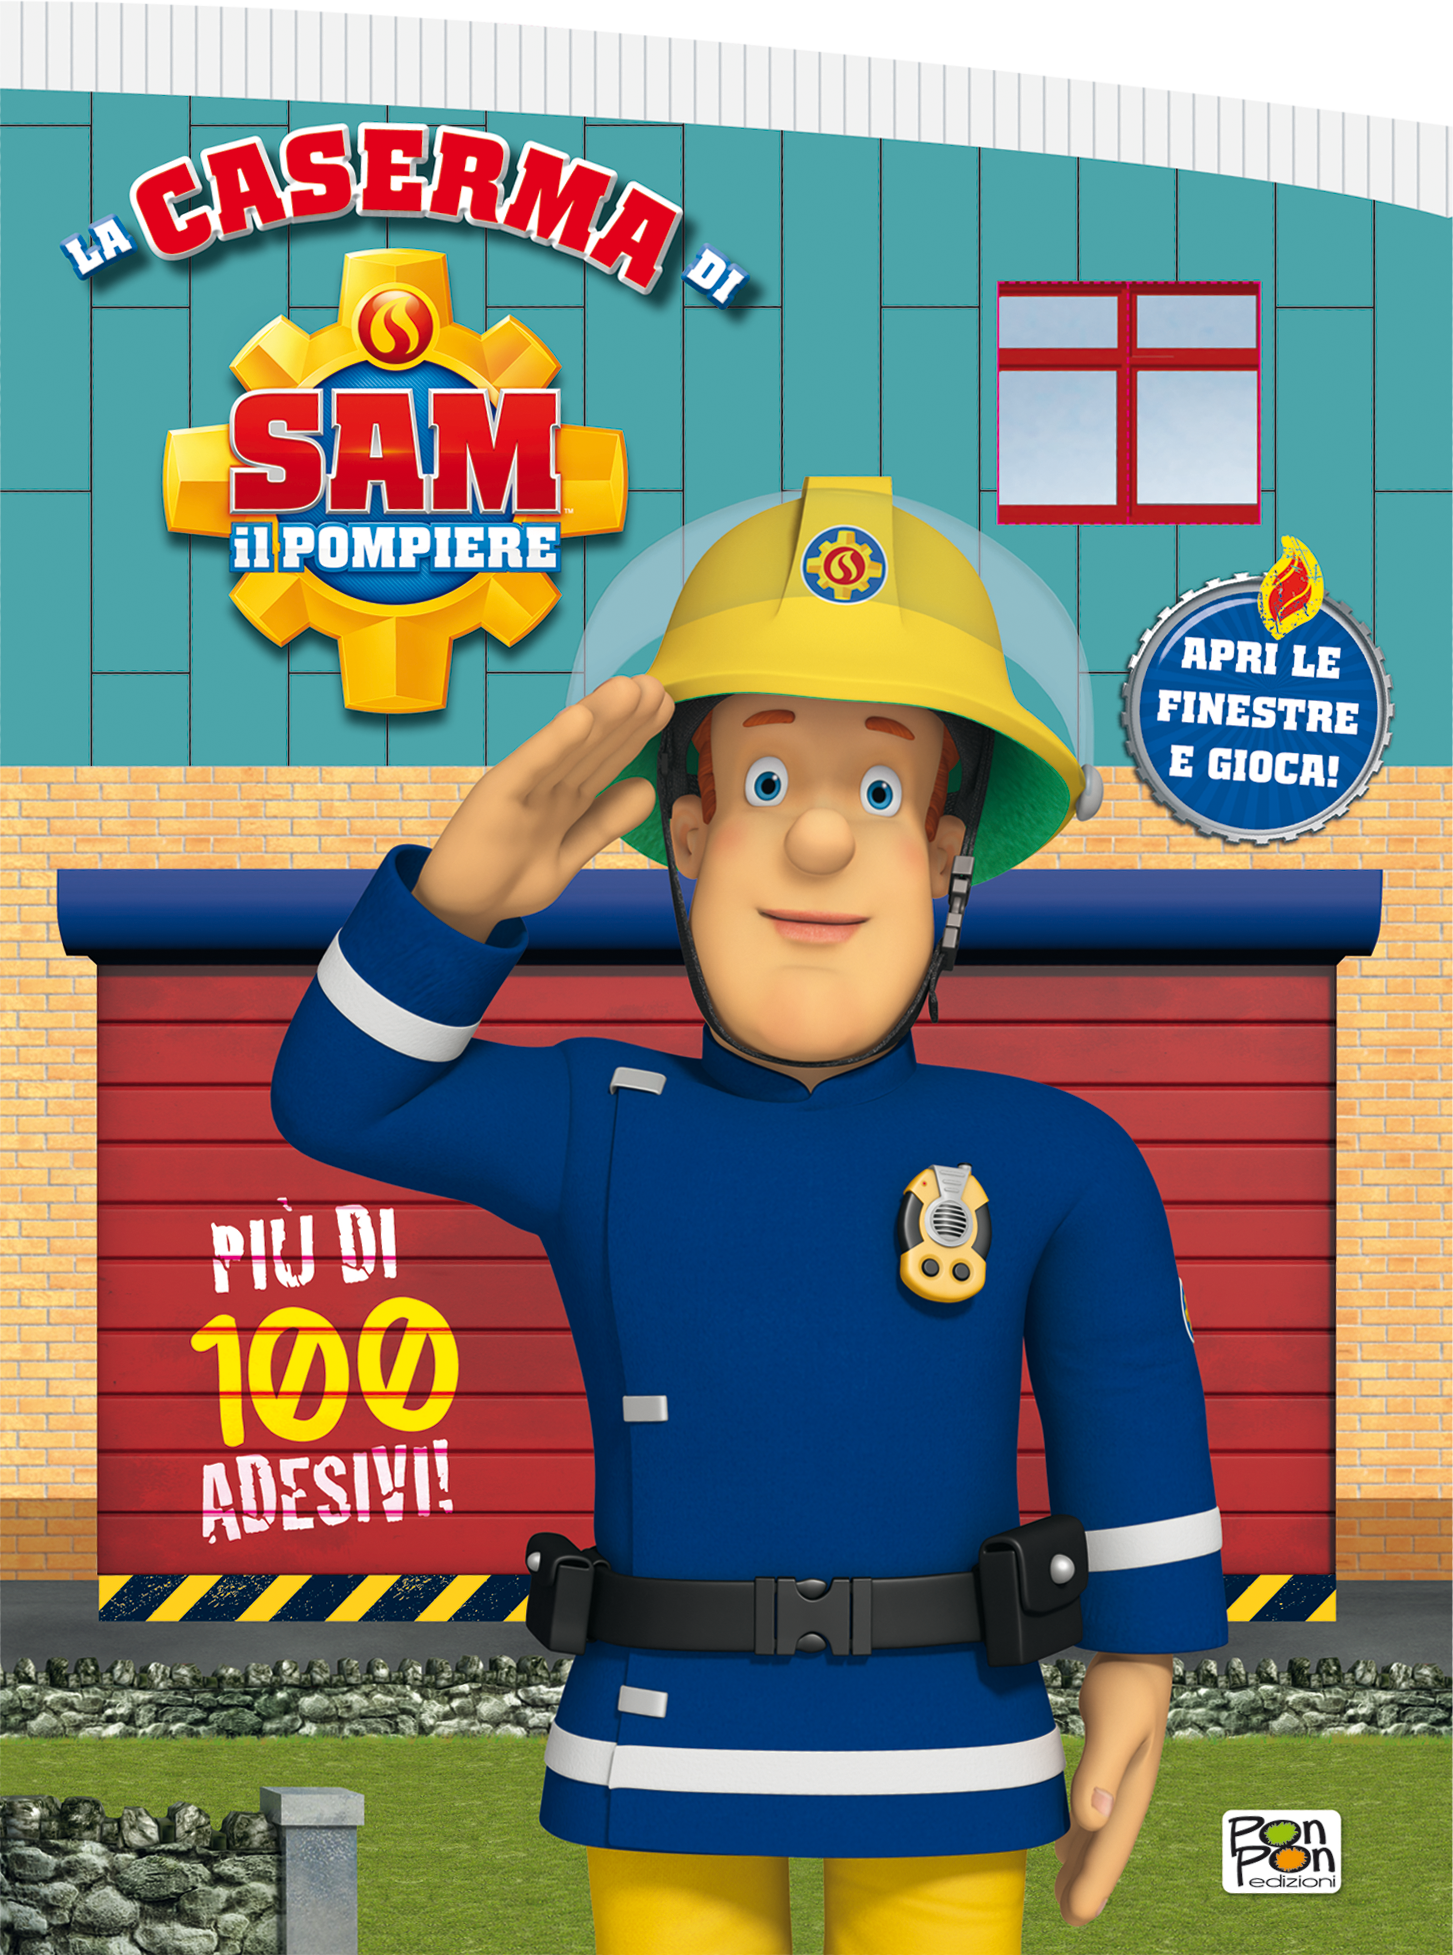 Fireman Sam 2017 New Episodes